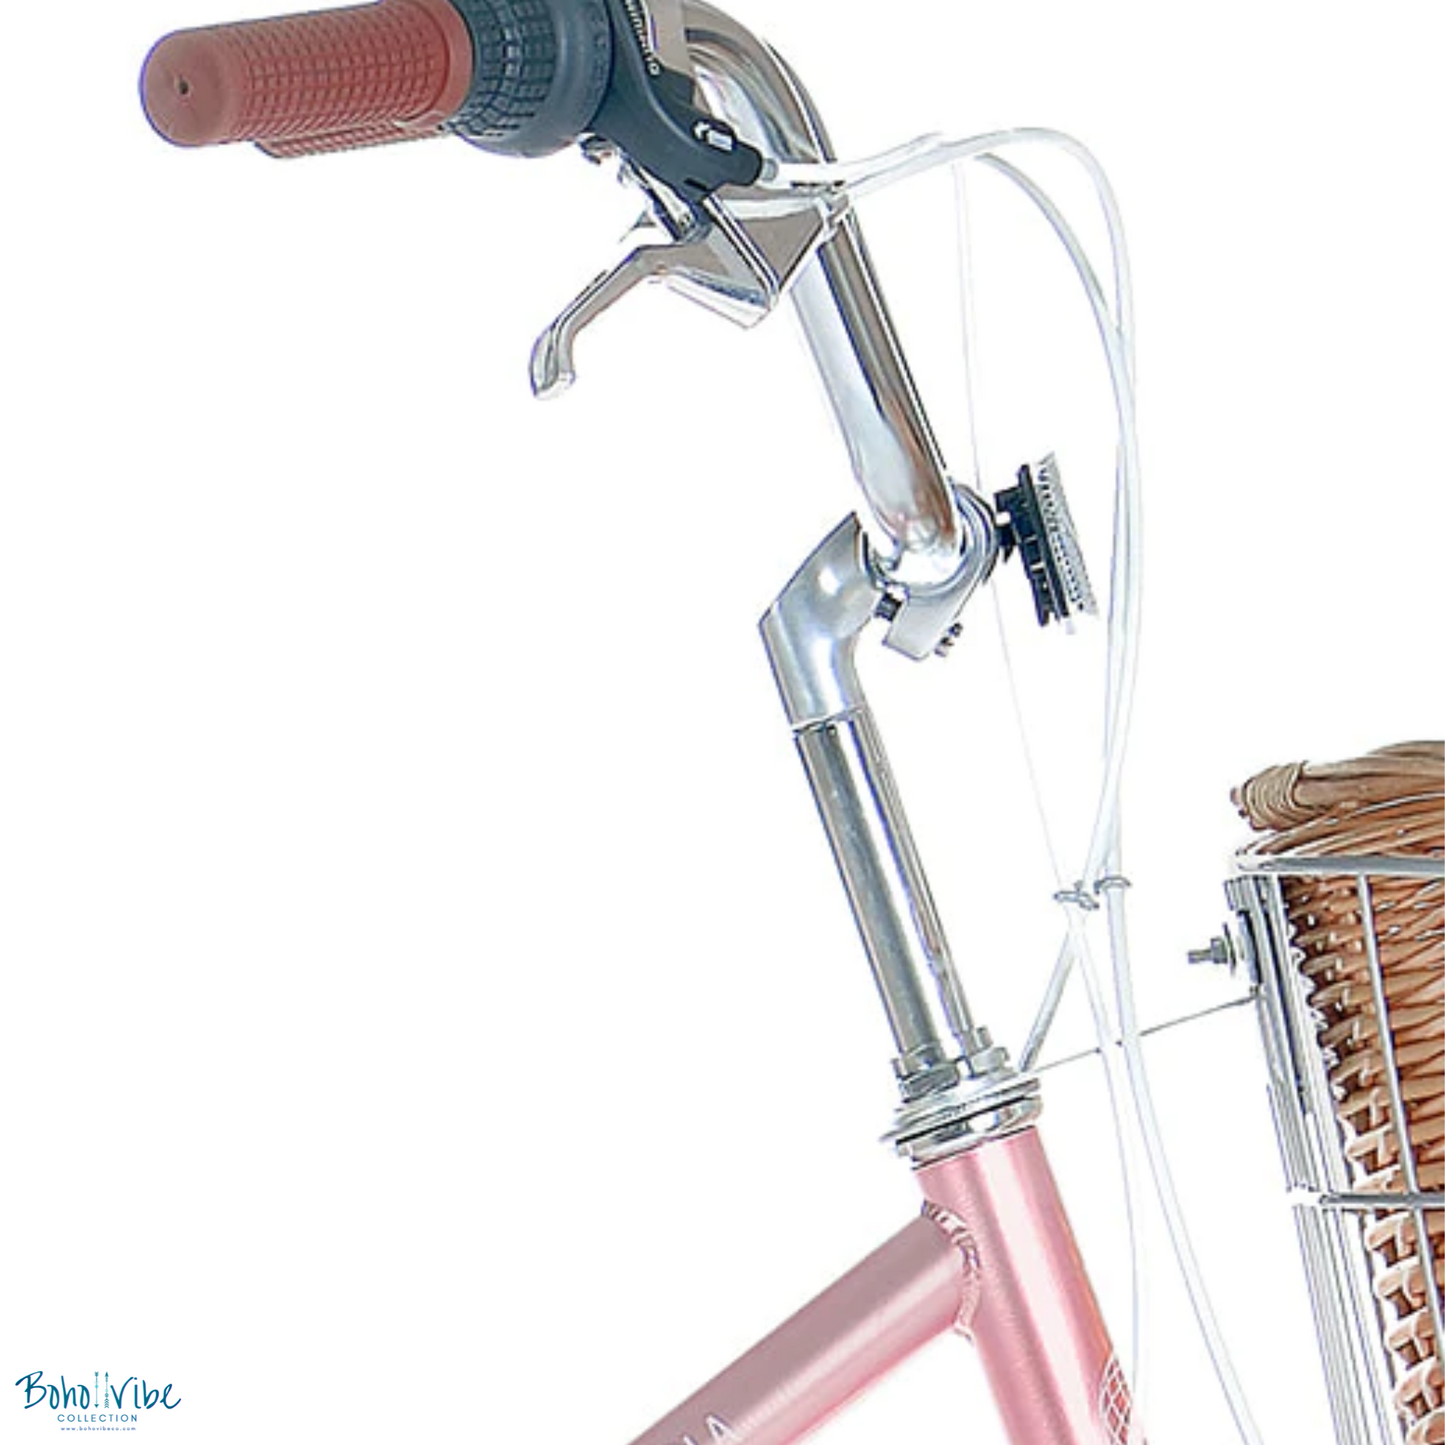 Boho ↡↟ Vibe Collection ↠  Vintage Cruiser Progear Pomona Coastal Commuter Bike Rose Gold Ladies Teen 15" with Basket 